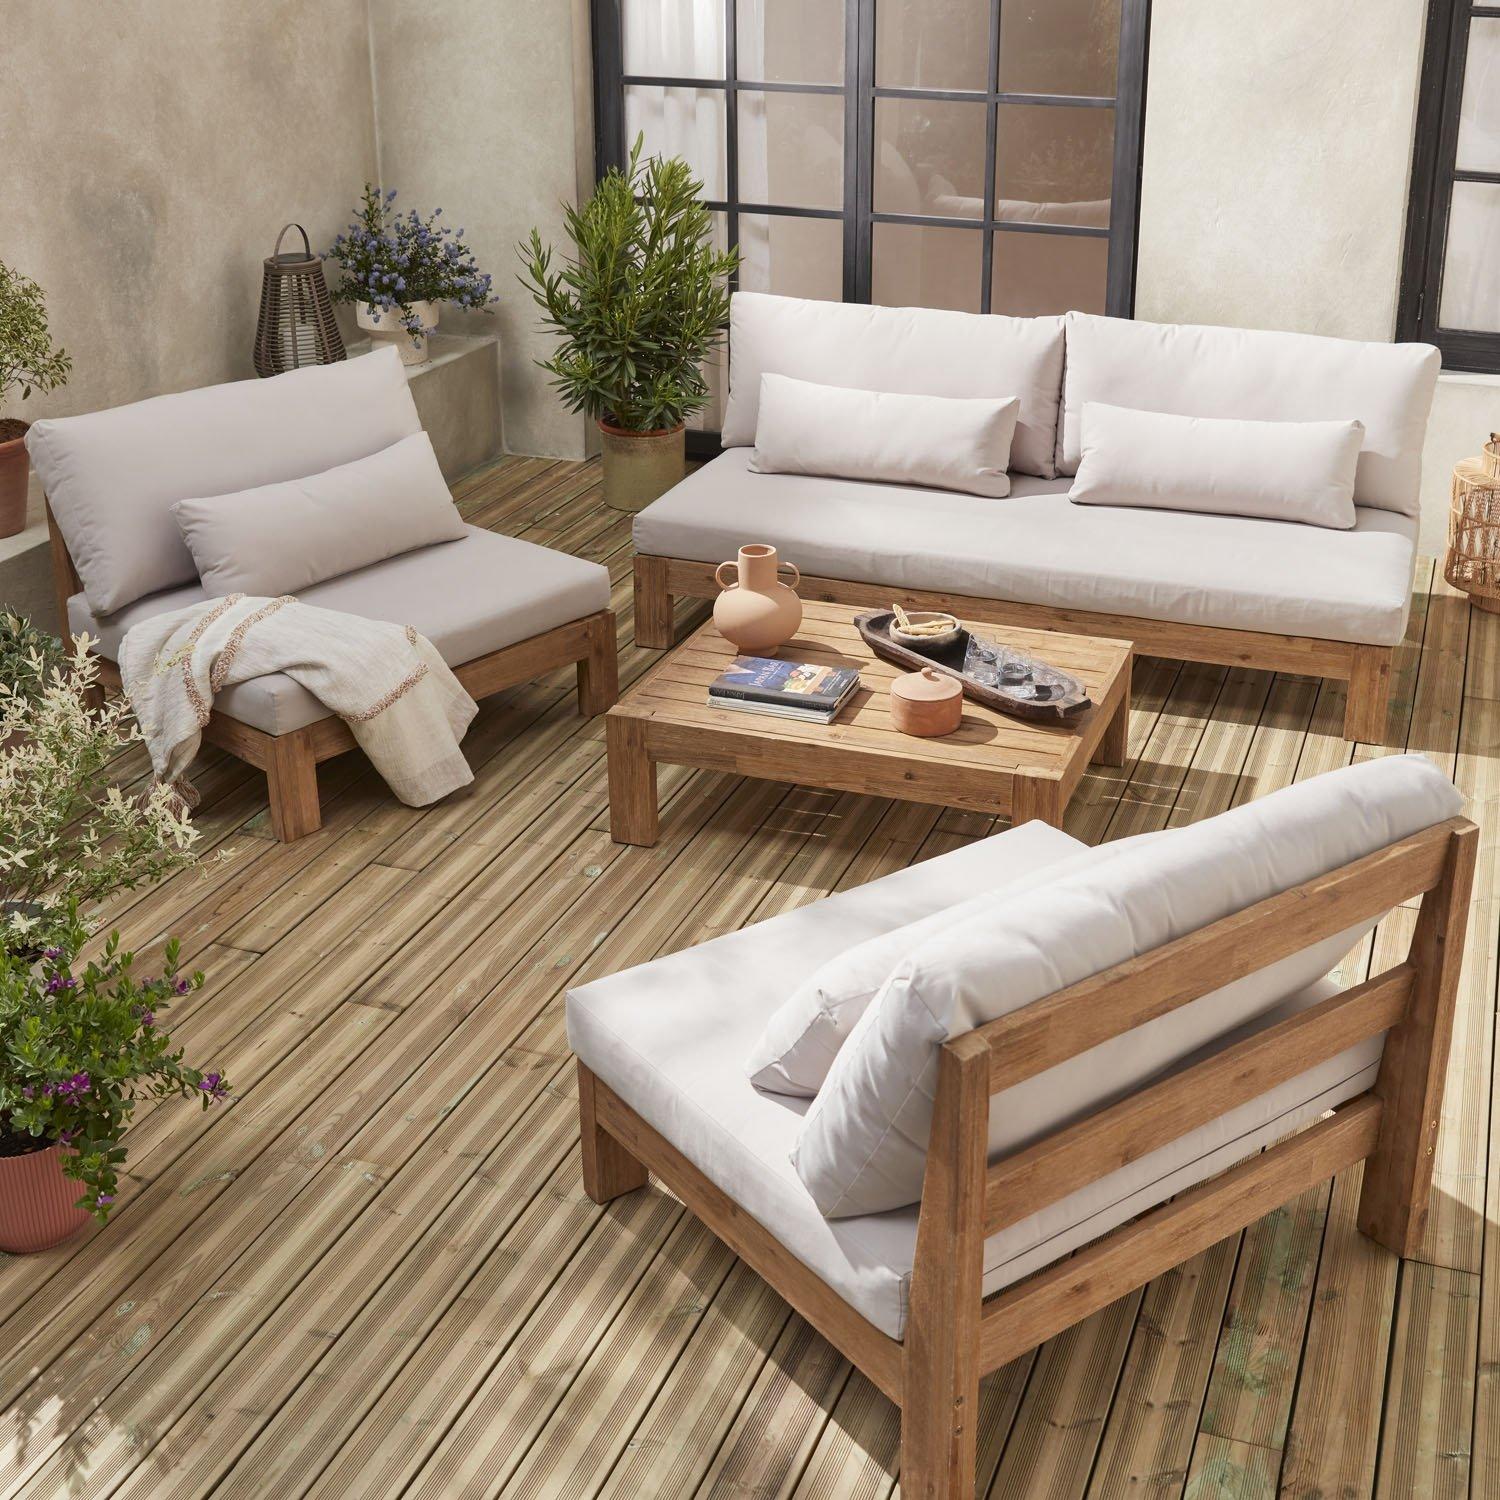 5-seater Premium Wooden Garden Sofa Set